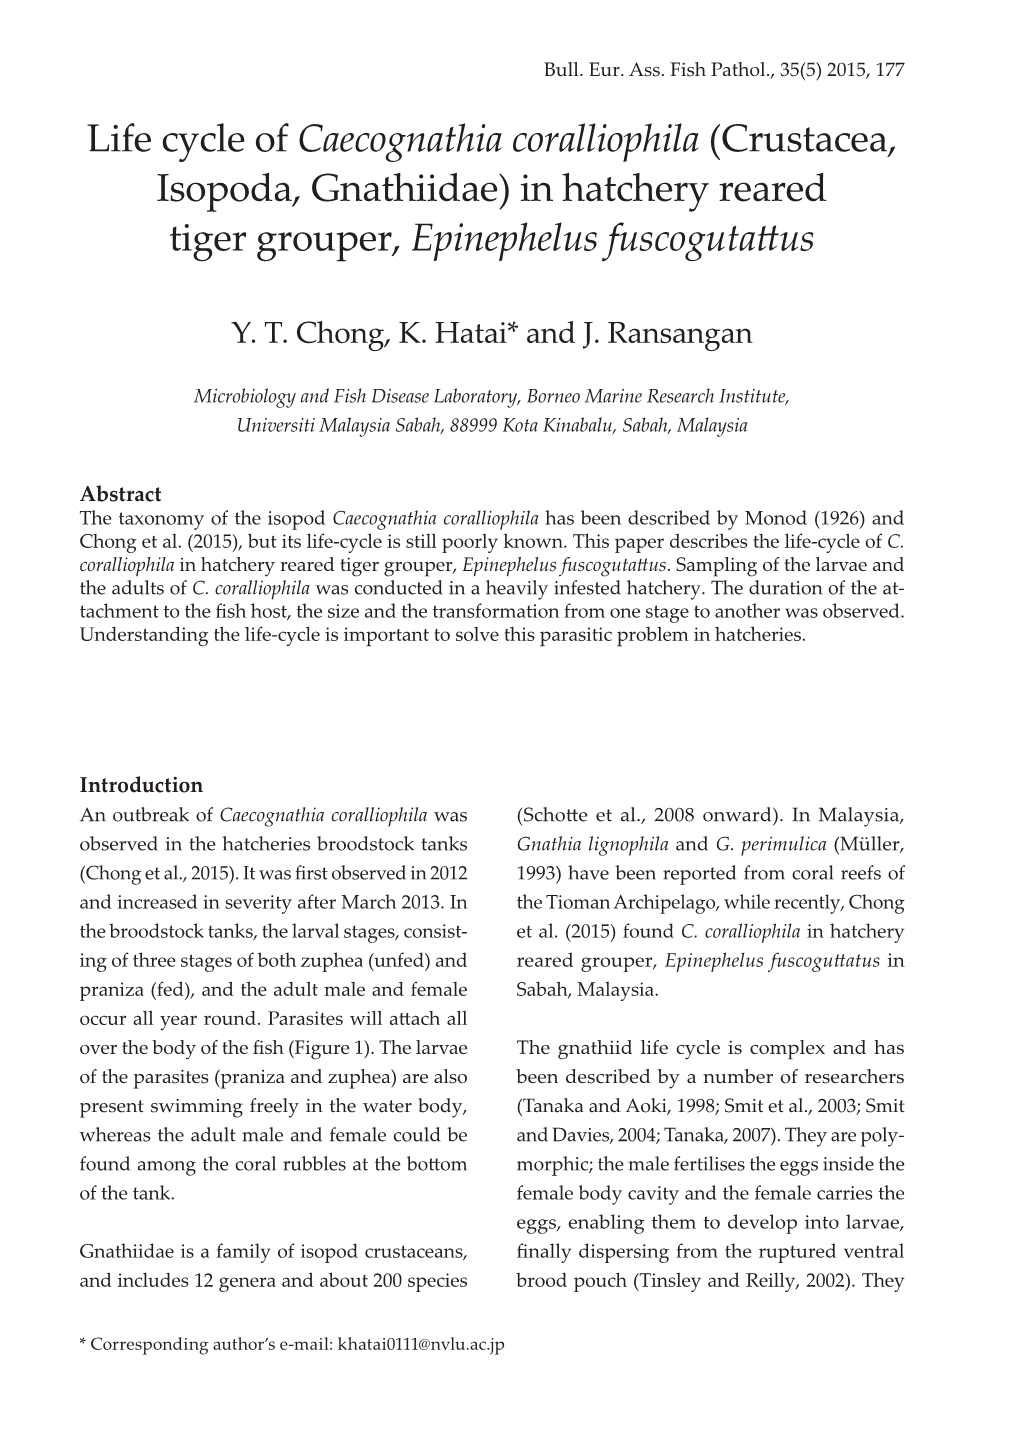 (Crustacea, Isopoda, Gnathiidae) in Hatchery Reared Tiger Grouper, ™’—Ž™‘Ž•žœȰžœŒ˜žŠĴžœ